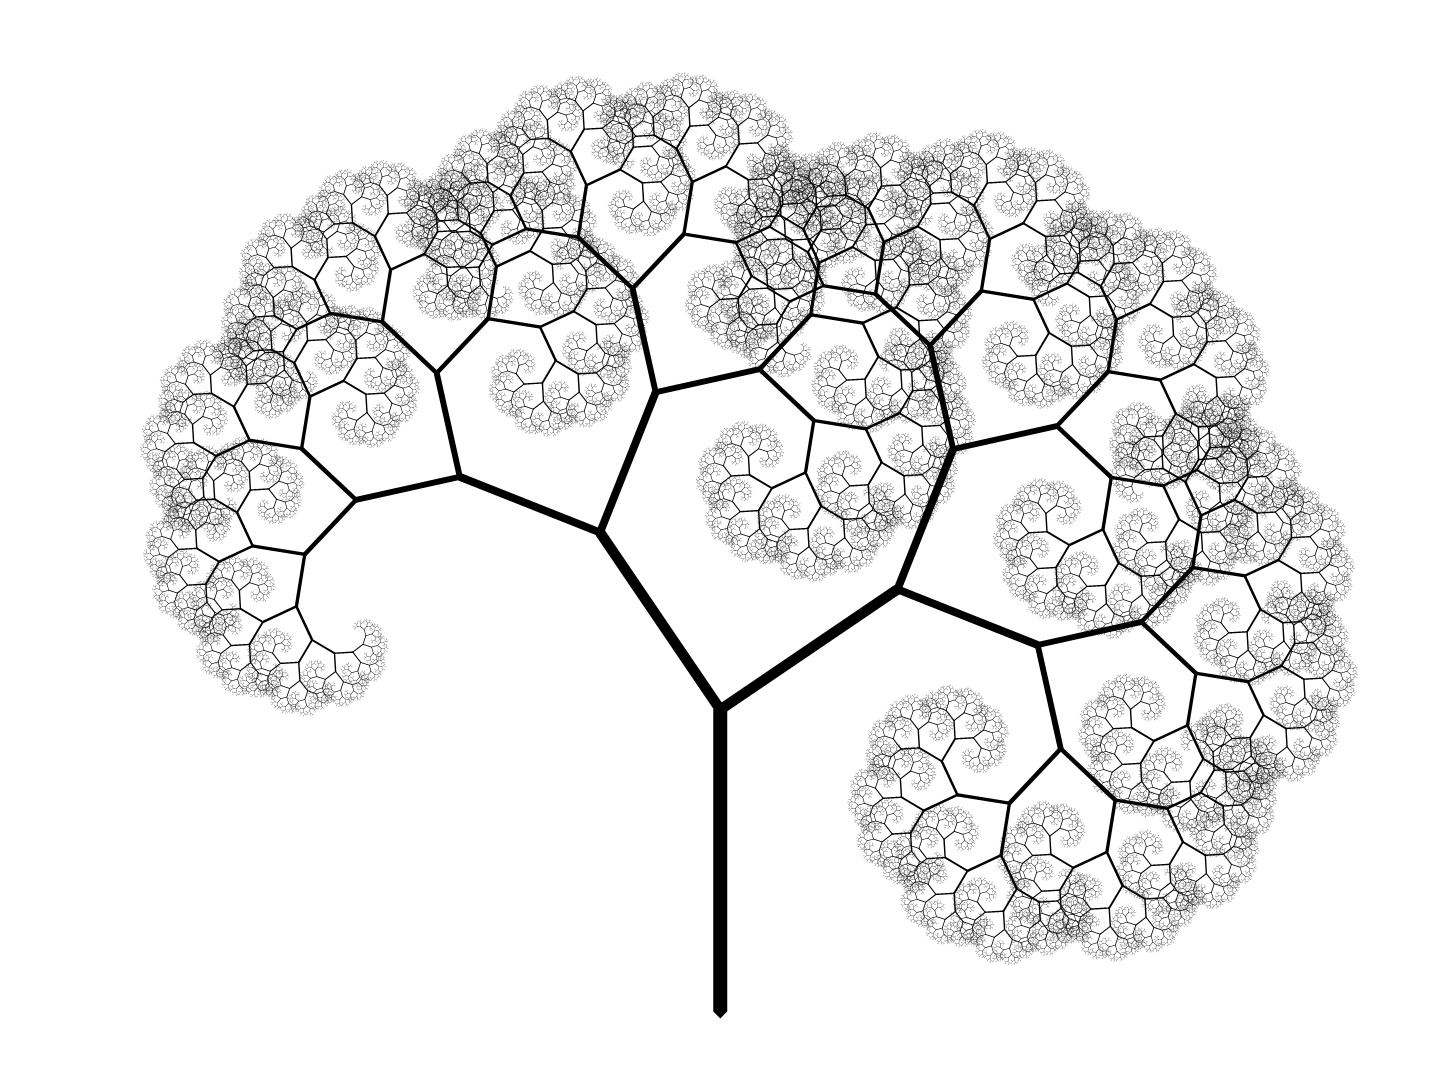 Animated Pythagoras tree: Introduction – MarekFiser.com